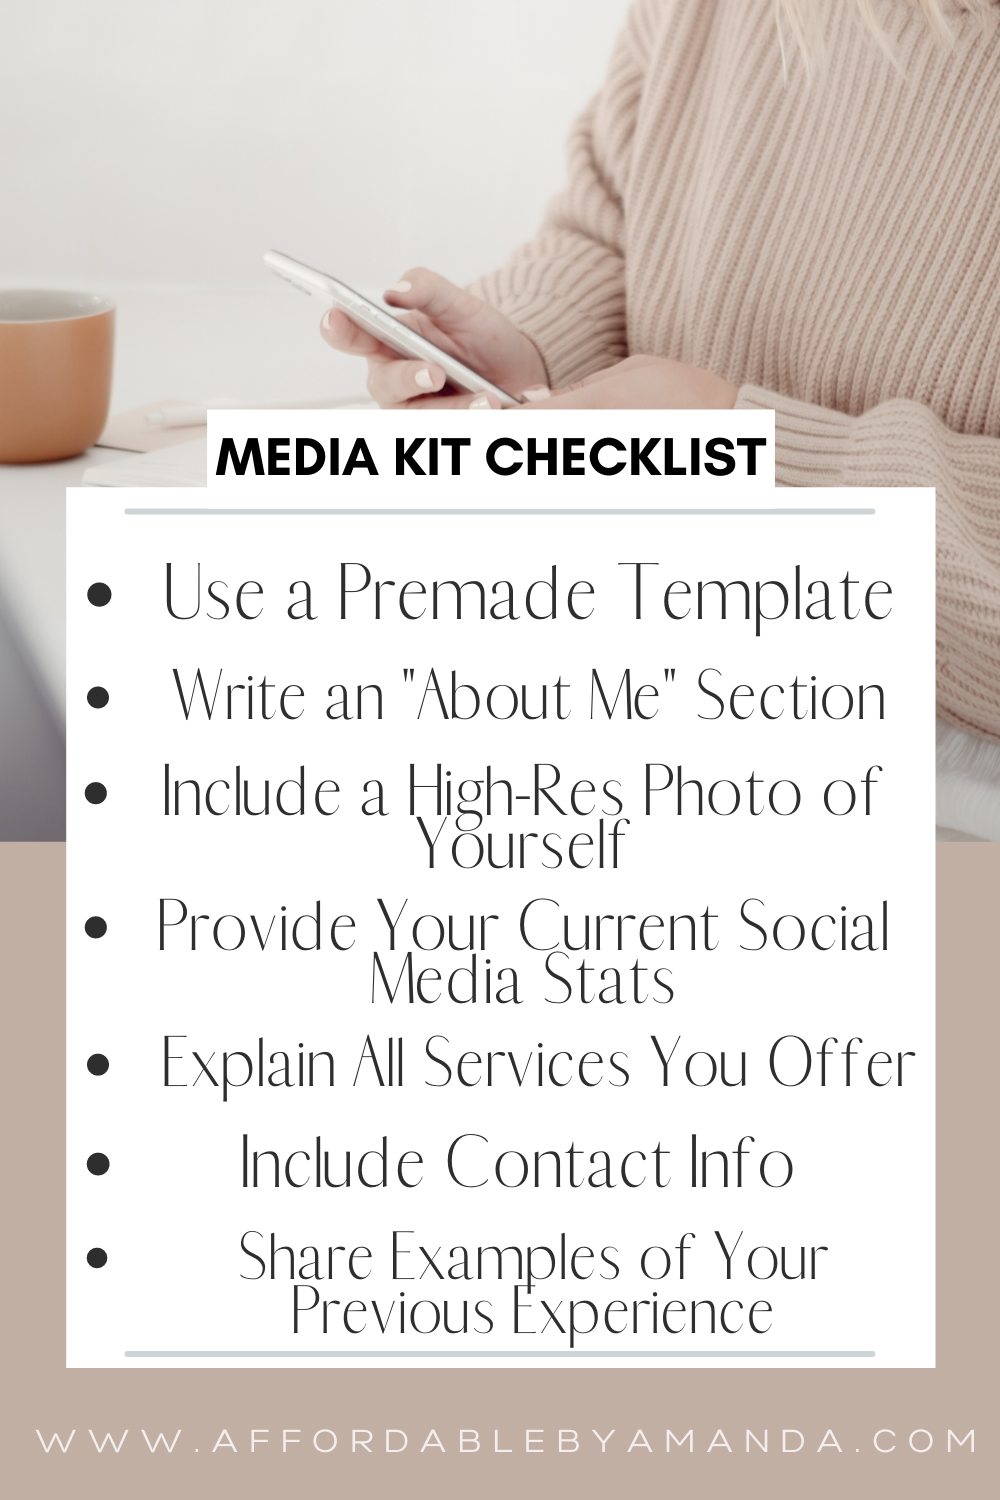 Media Kit Checklist | Blog Media Press Kit Examples and Templates | Affordable by Amanda